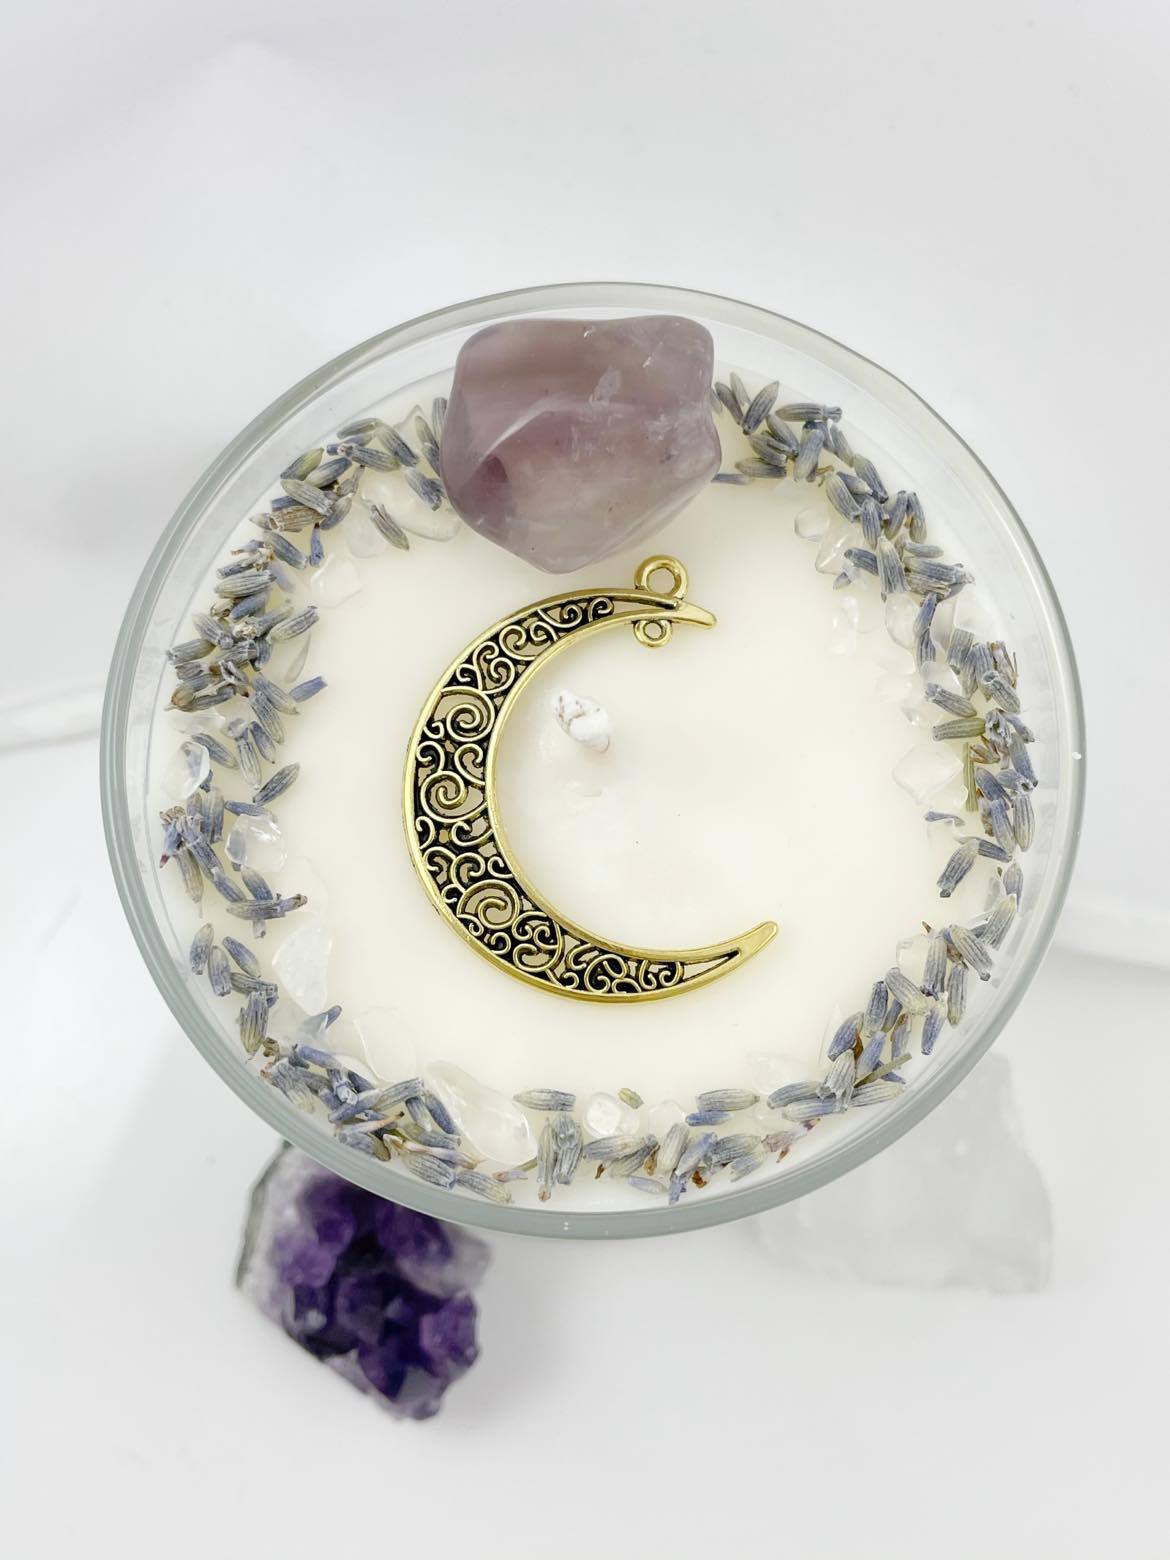 Moon Goddess - Moon Lake Musk Crystal Candle